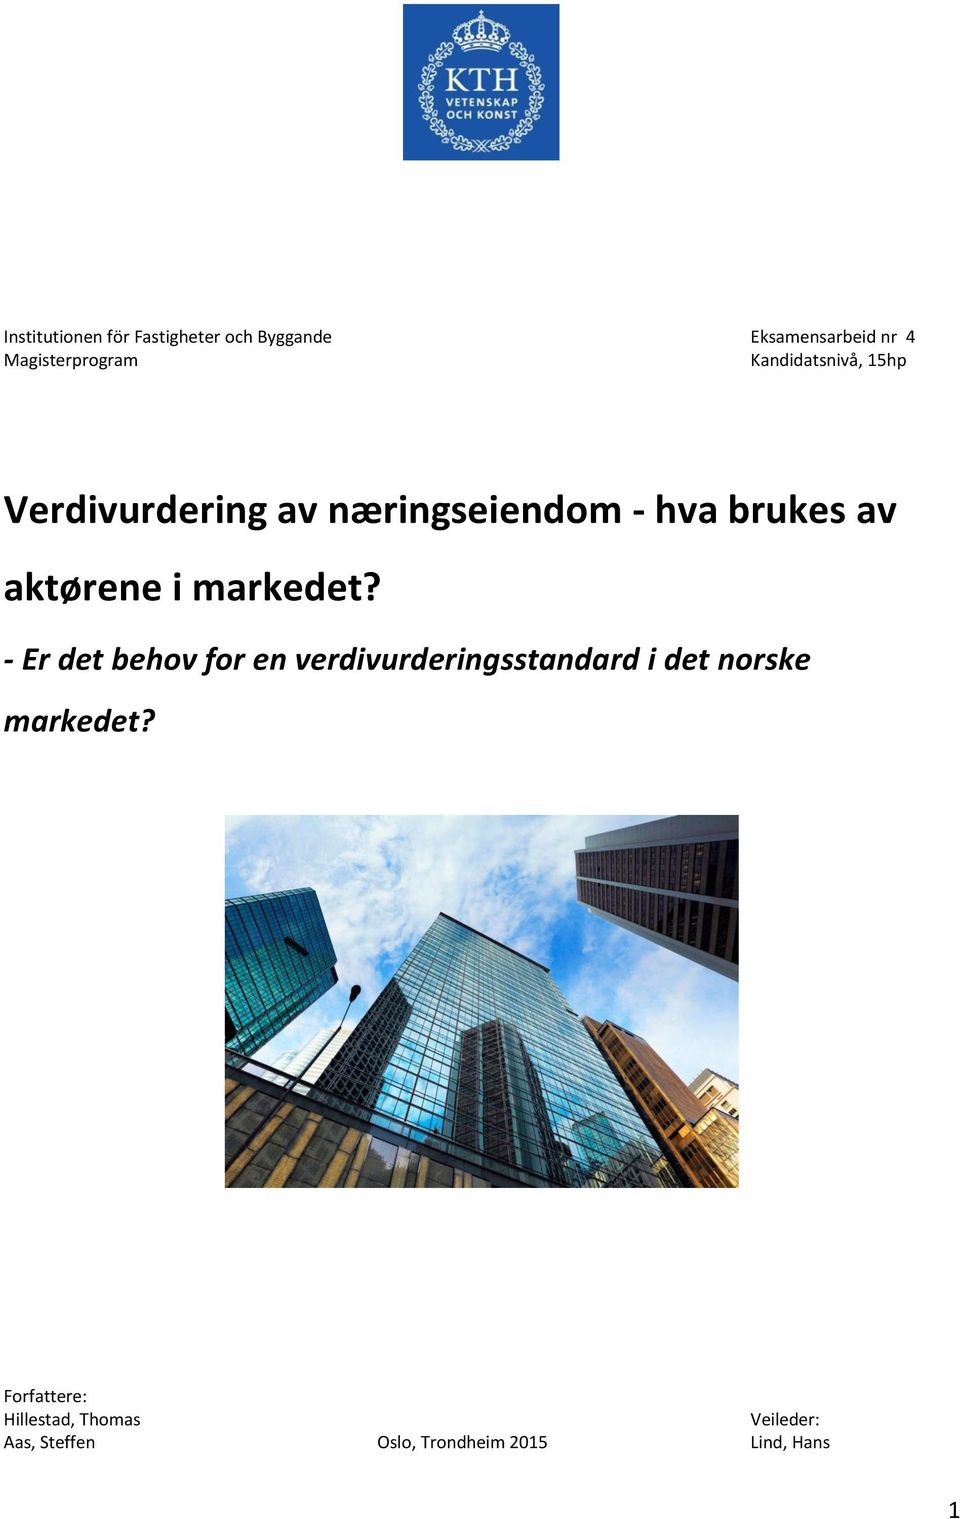 markedet? - Er det behov for en verdivurderingsstandard i det norske markedet?